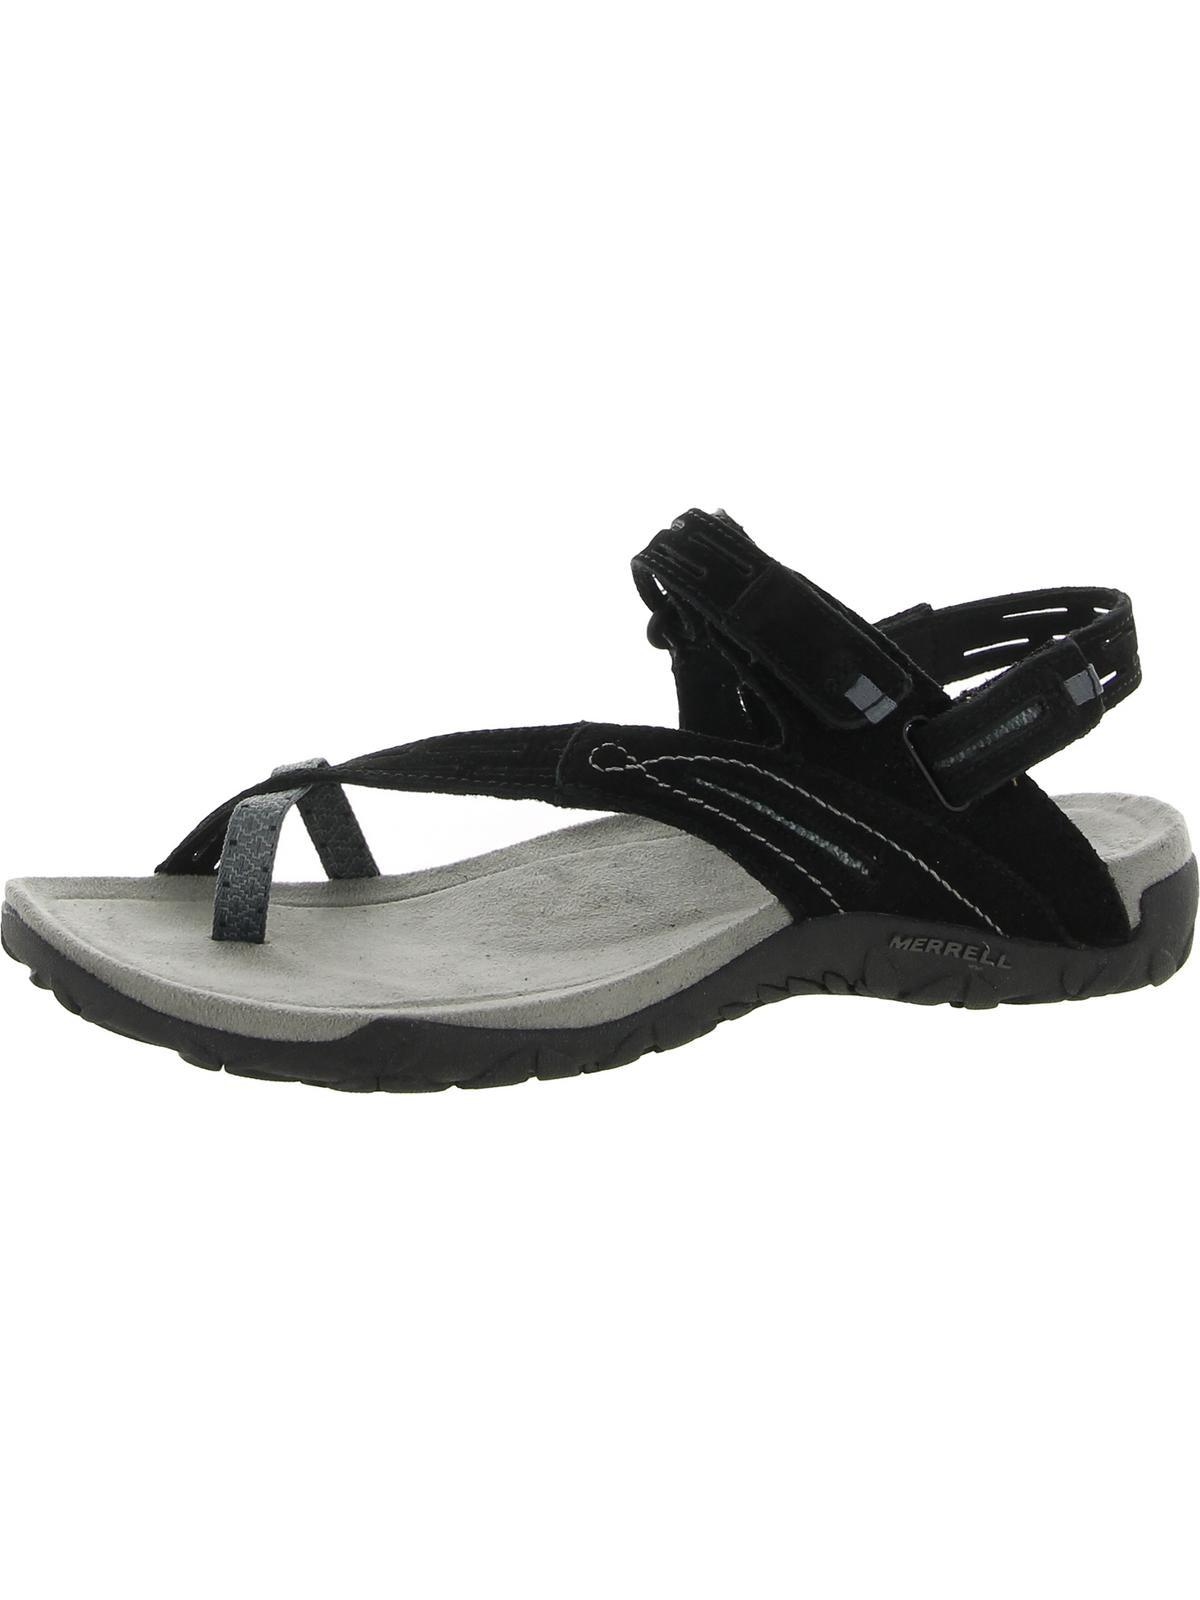 Merrell Terran Cross Ii Memory Foam Comfort Slingback Sandals in Black |  Lyst